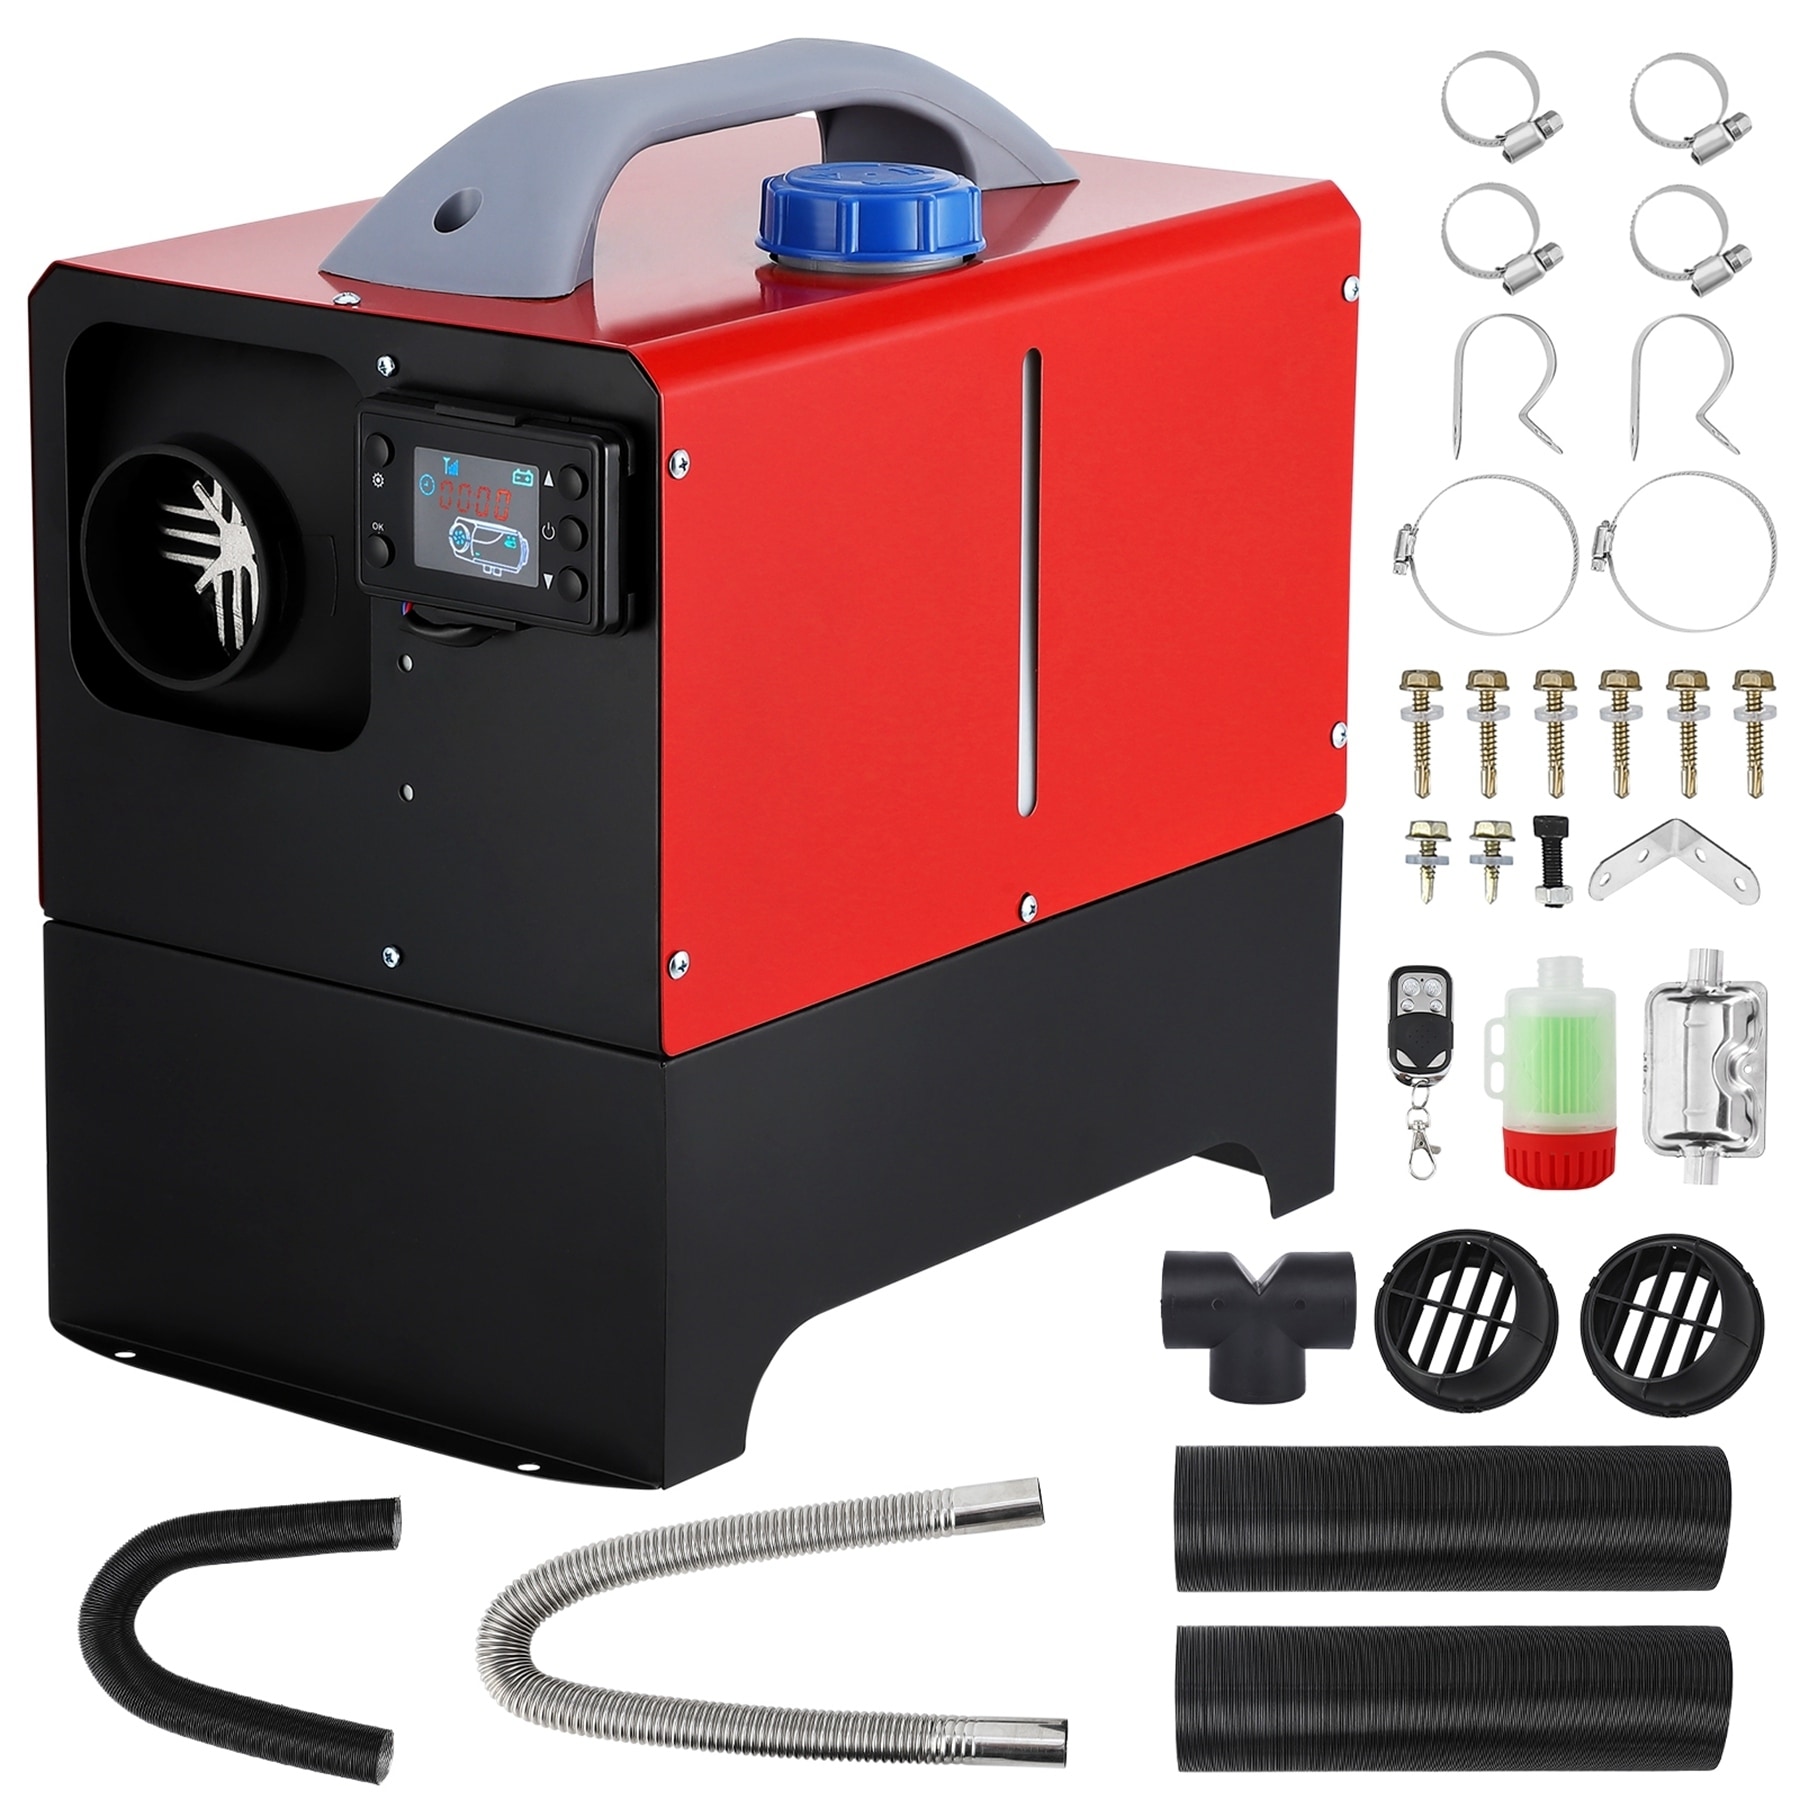 Hcalory Diesel Heater - My New Studio Heater! For Camper - Garage Car  Storage - Emergency Backup 